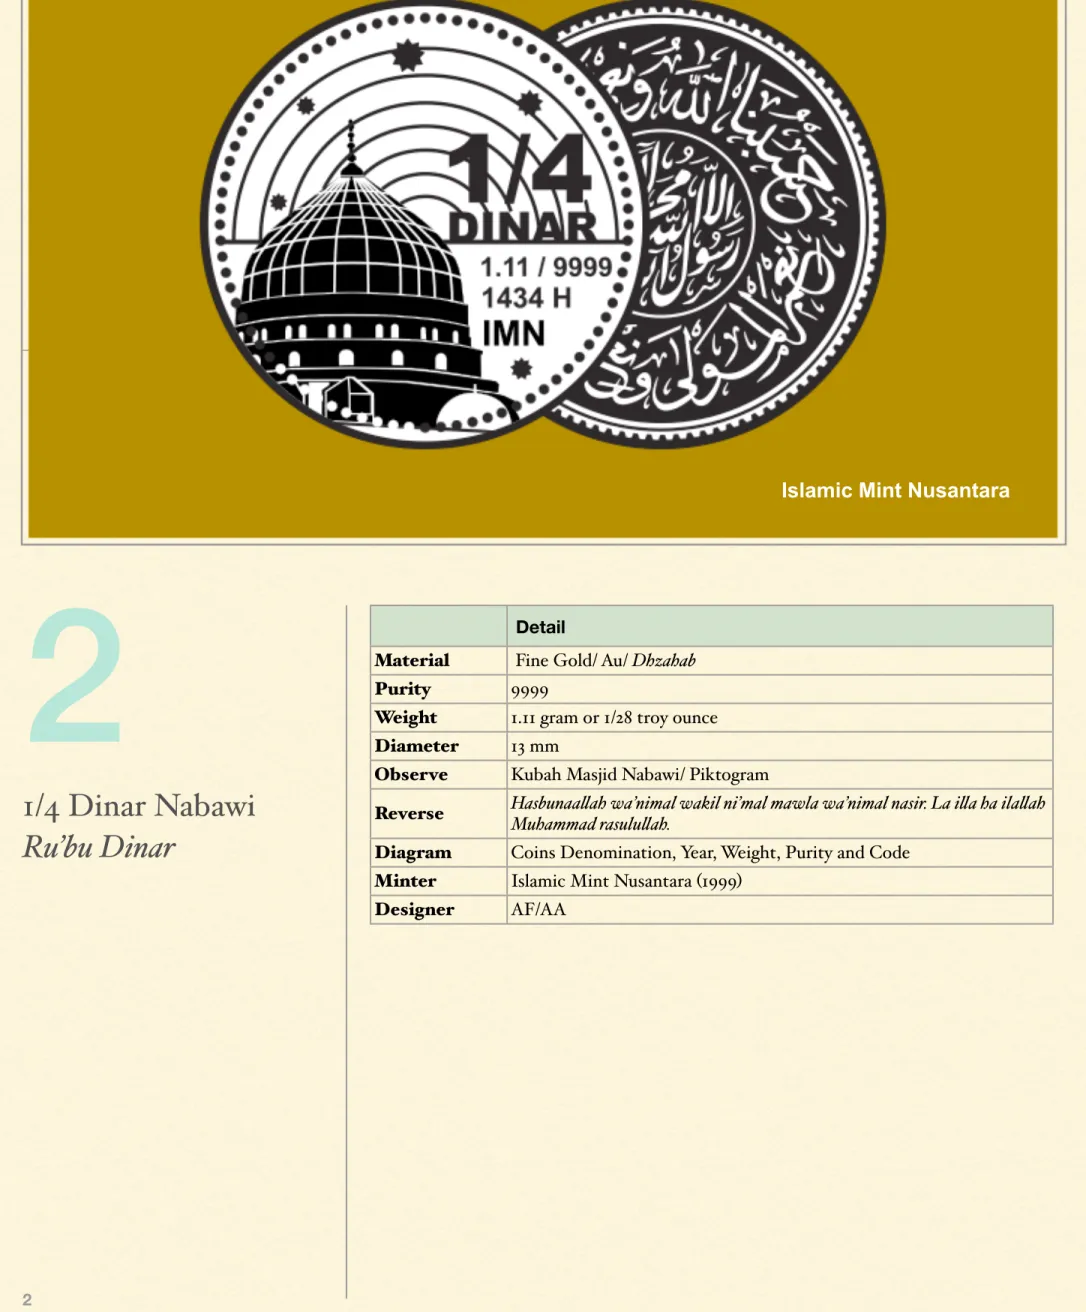 Diagram Coins Denomination, Year, Weight, Purity and Code Minter Islamic Mint Nusantara (1999)